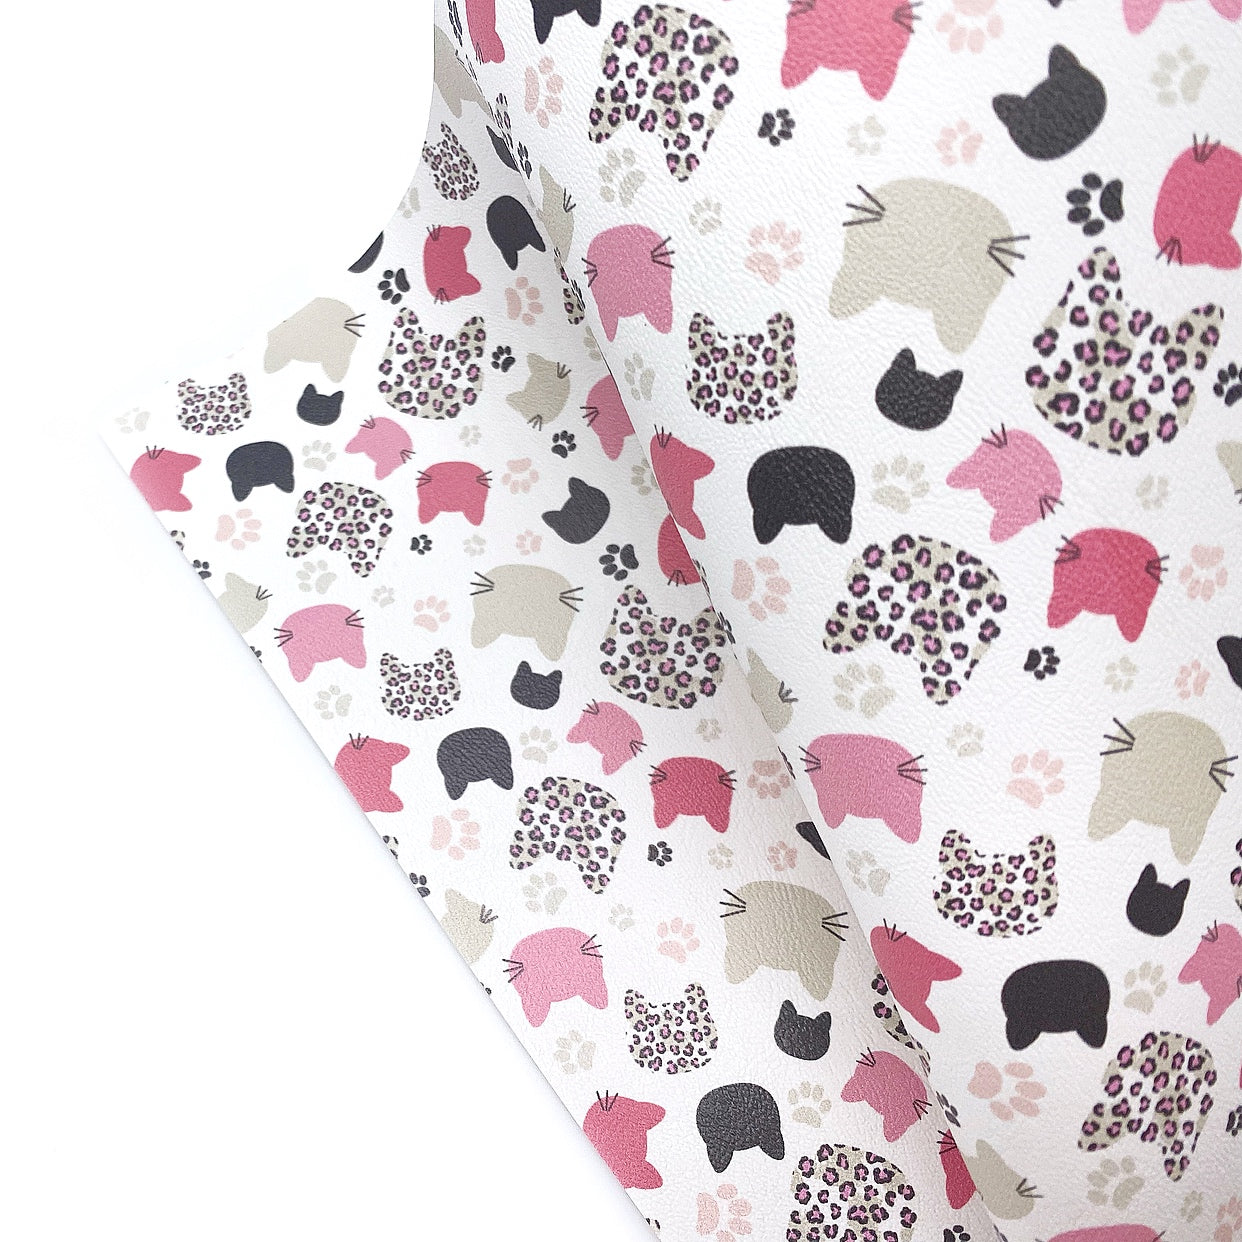 Leopard Cat Silhouette Premium Faux Leather Fabric Sheets